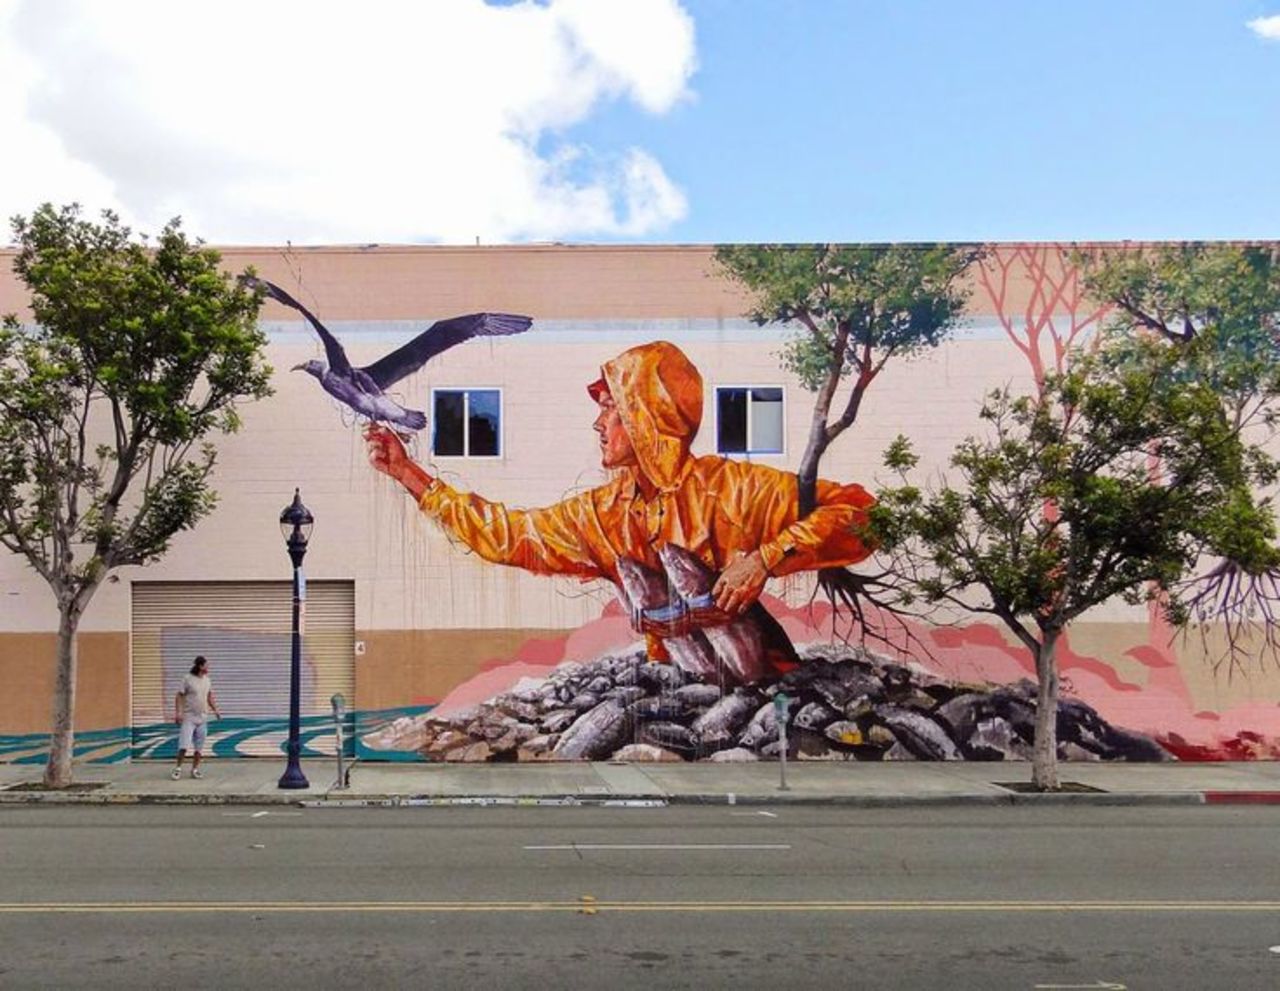 RT "@EseGraffiti: Artista: Fintan Magee
San Diego, California, EE.UU.
#art #streetart #mural #graffiti #arteurbano http://t.co/yfQqx6l8B7"